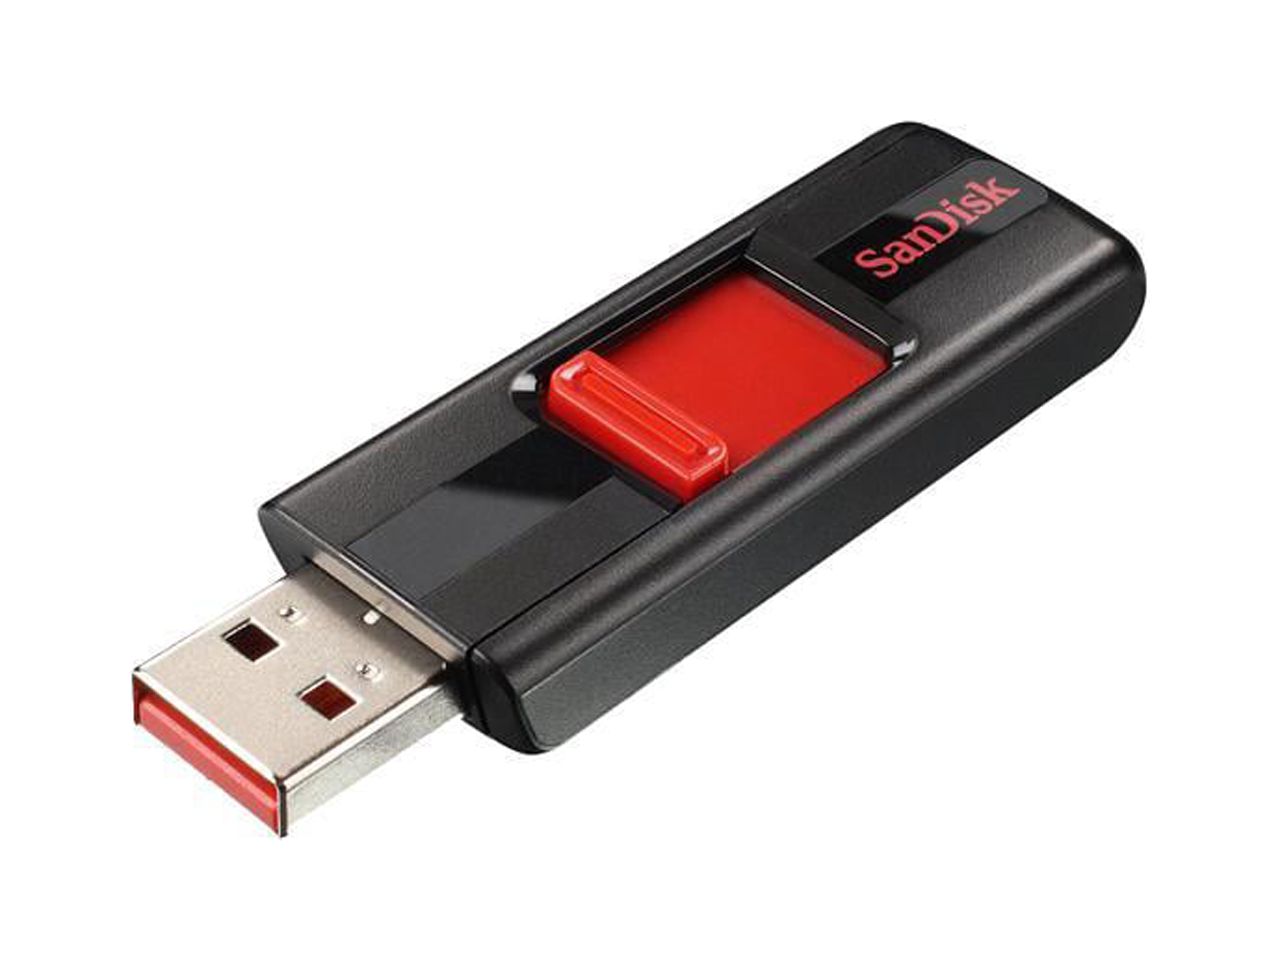 SanDisk 16GB Cruzer CZ36 USB 2.0 Flash Drive (SDCZ36-016G-B35) - image 2 of 4